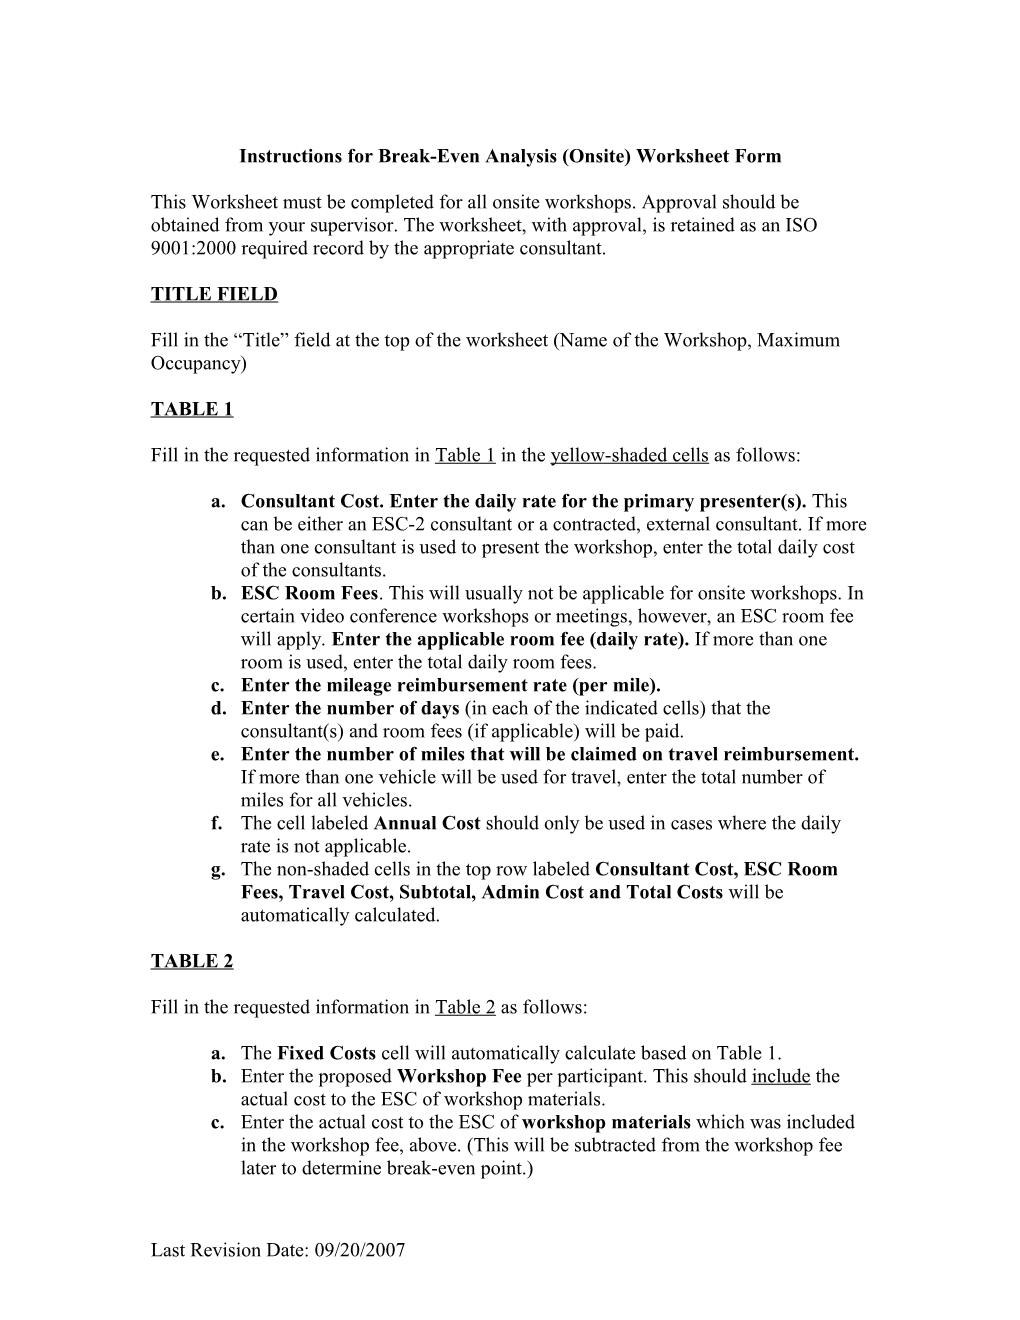 Instructions for Break-Even Analysis (In-House) Worksheet Form